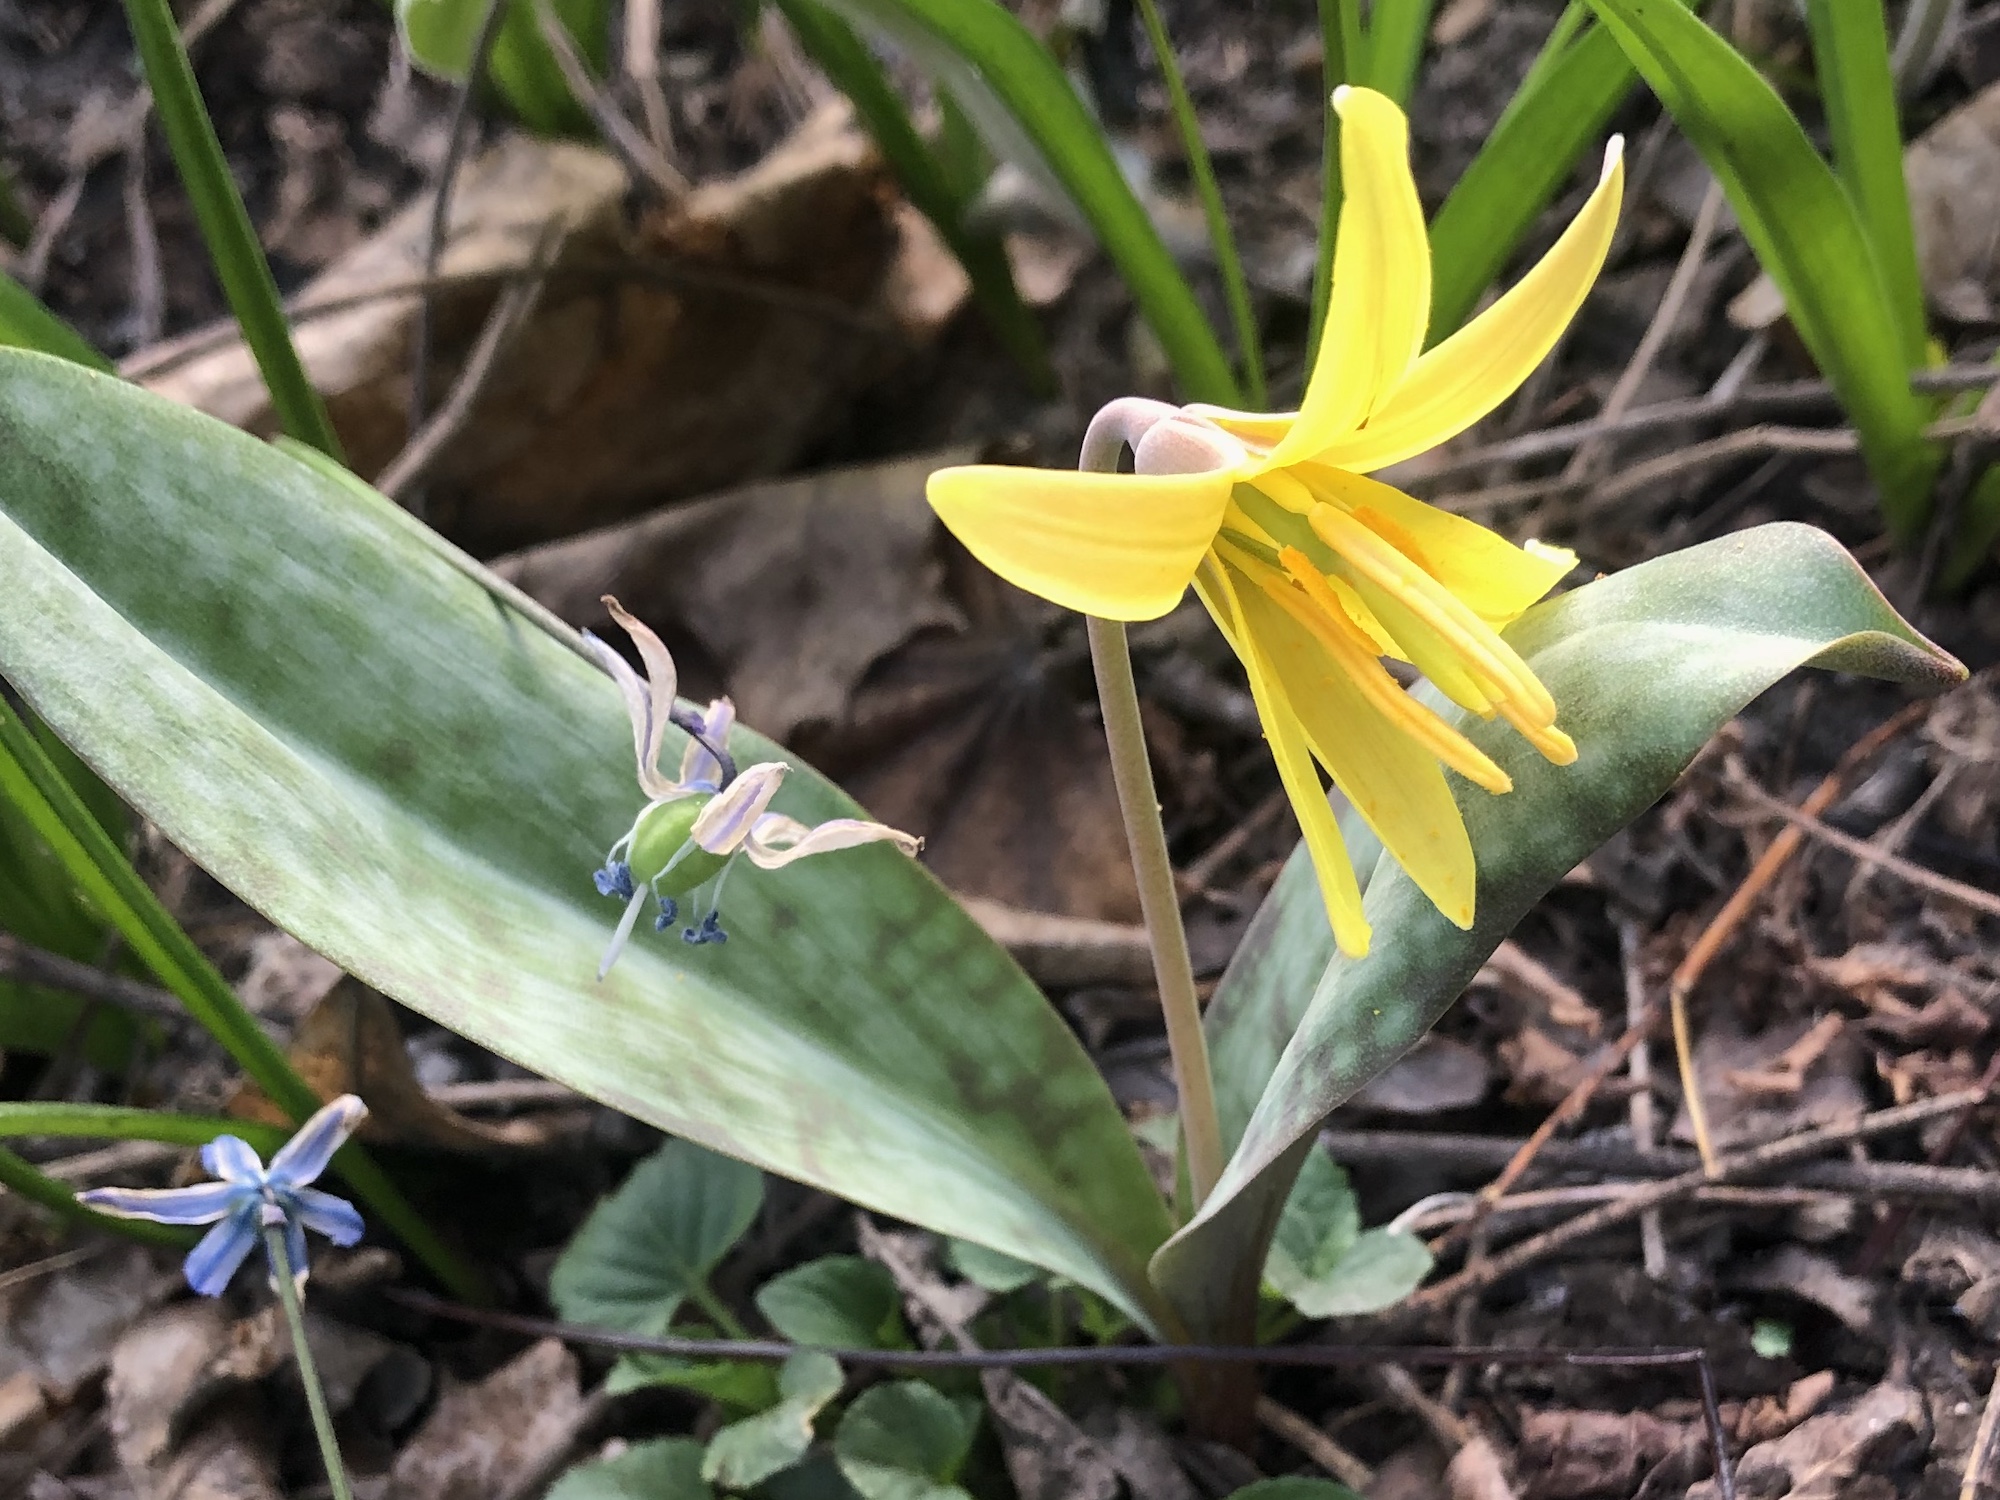 Yellow Trout Lily photo taken taken on April 15, 2023 in Madison, Wisconsin near Agawa Path.